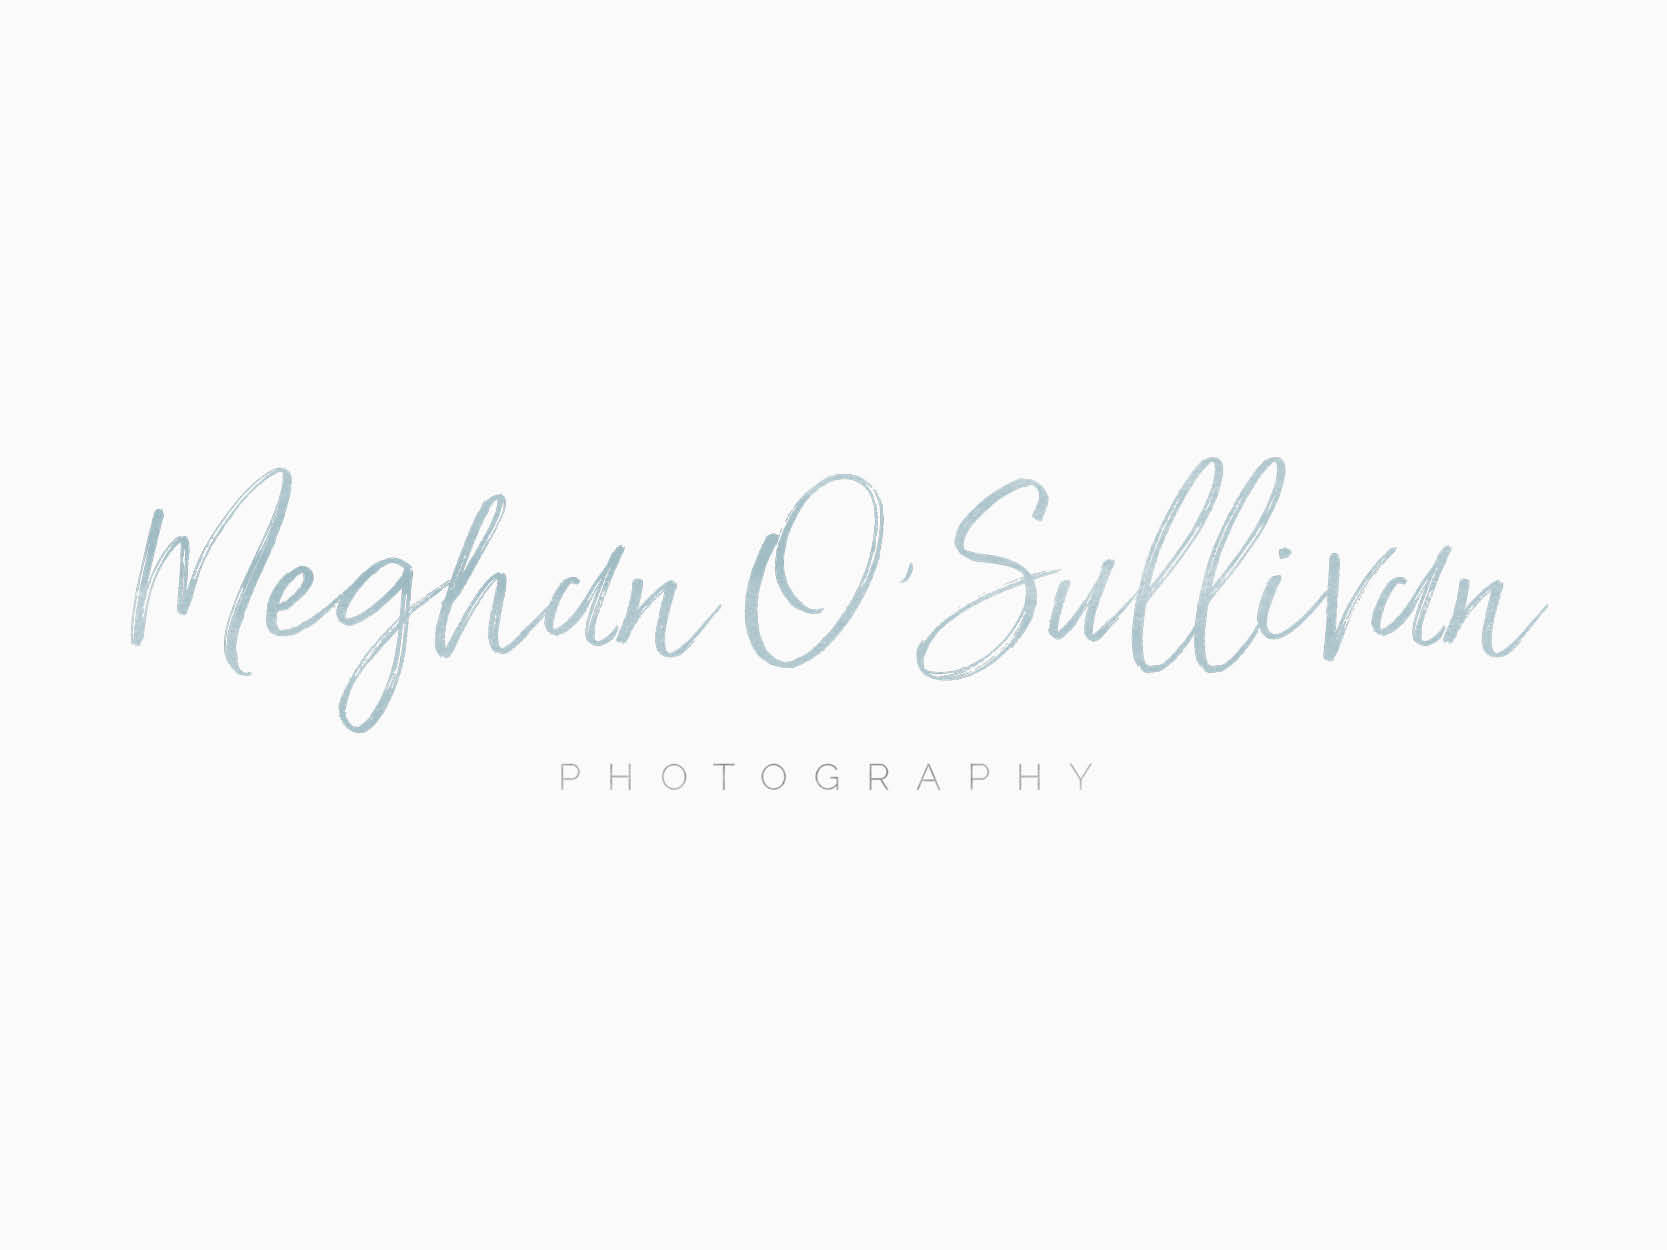 Meghan O'Sullivan Photography custom Squarespace website design by Emma Rose Company.  #squarespace #photographer #beautifulbranding